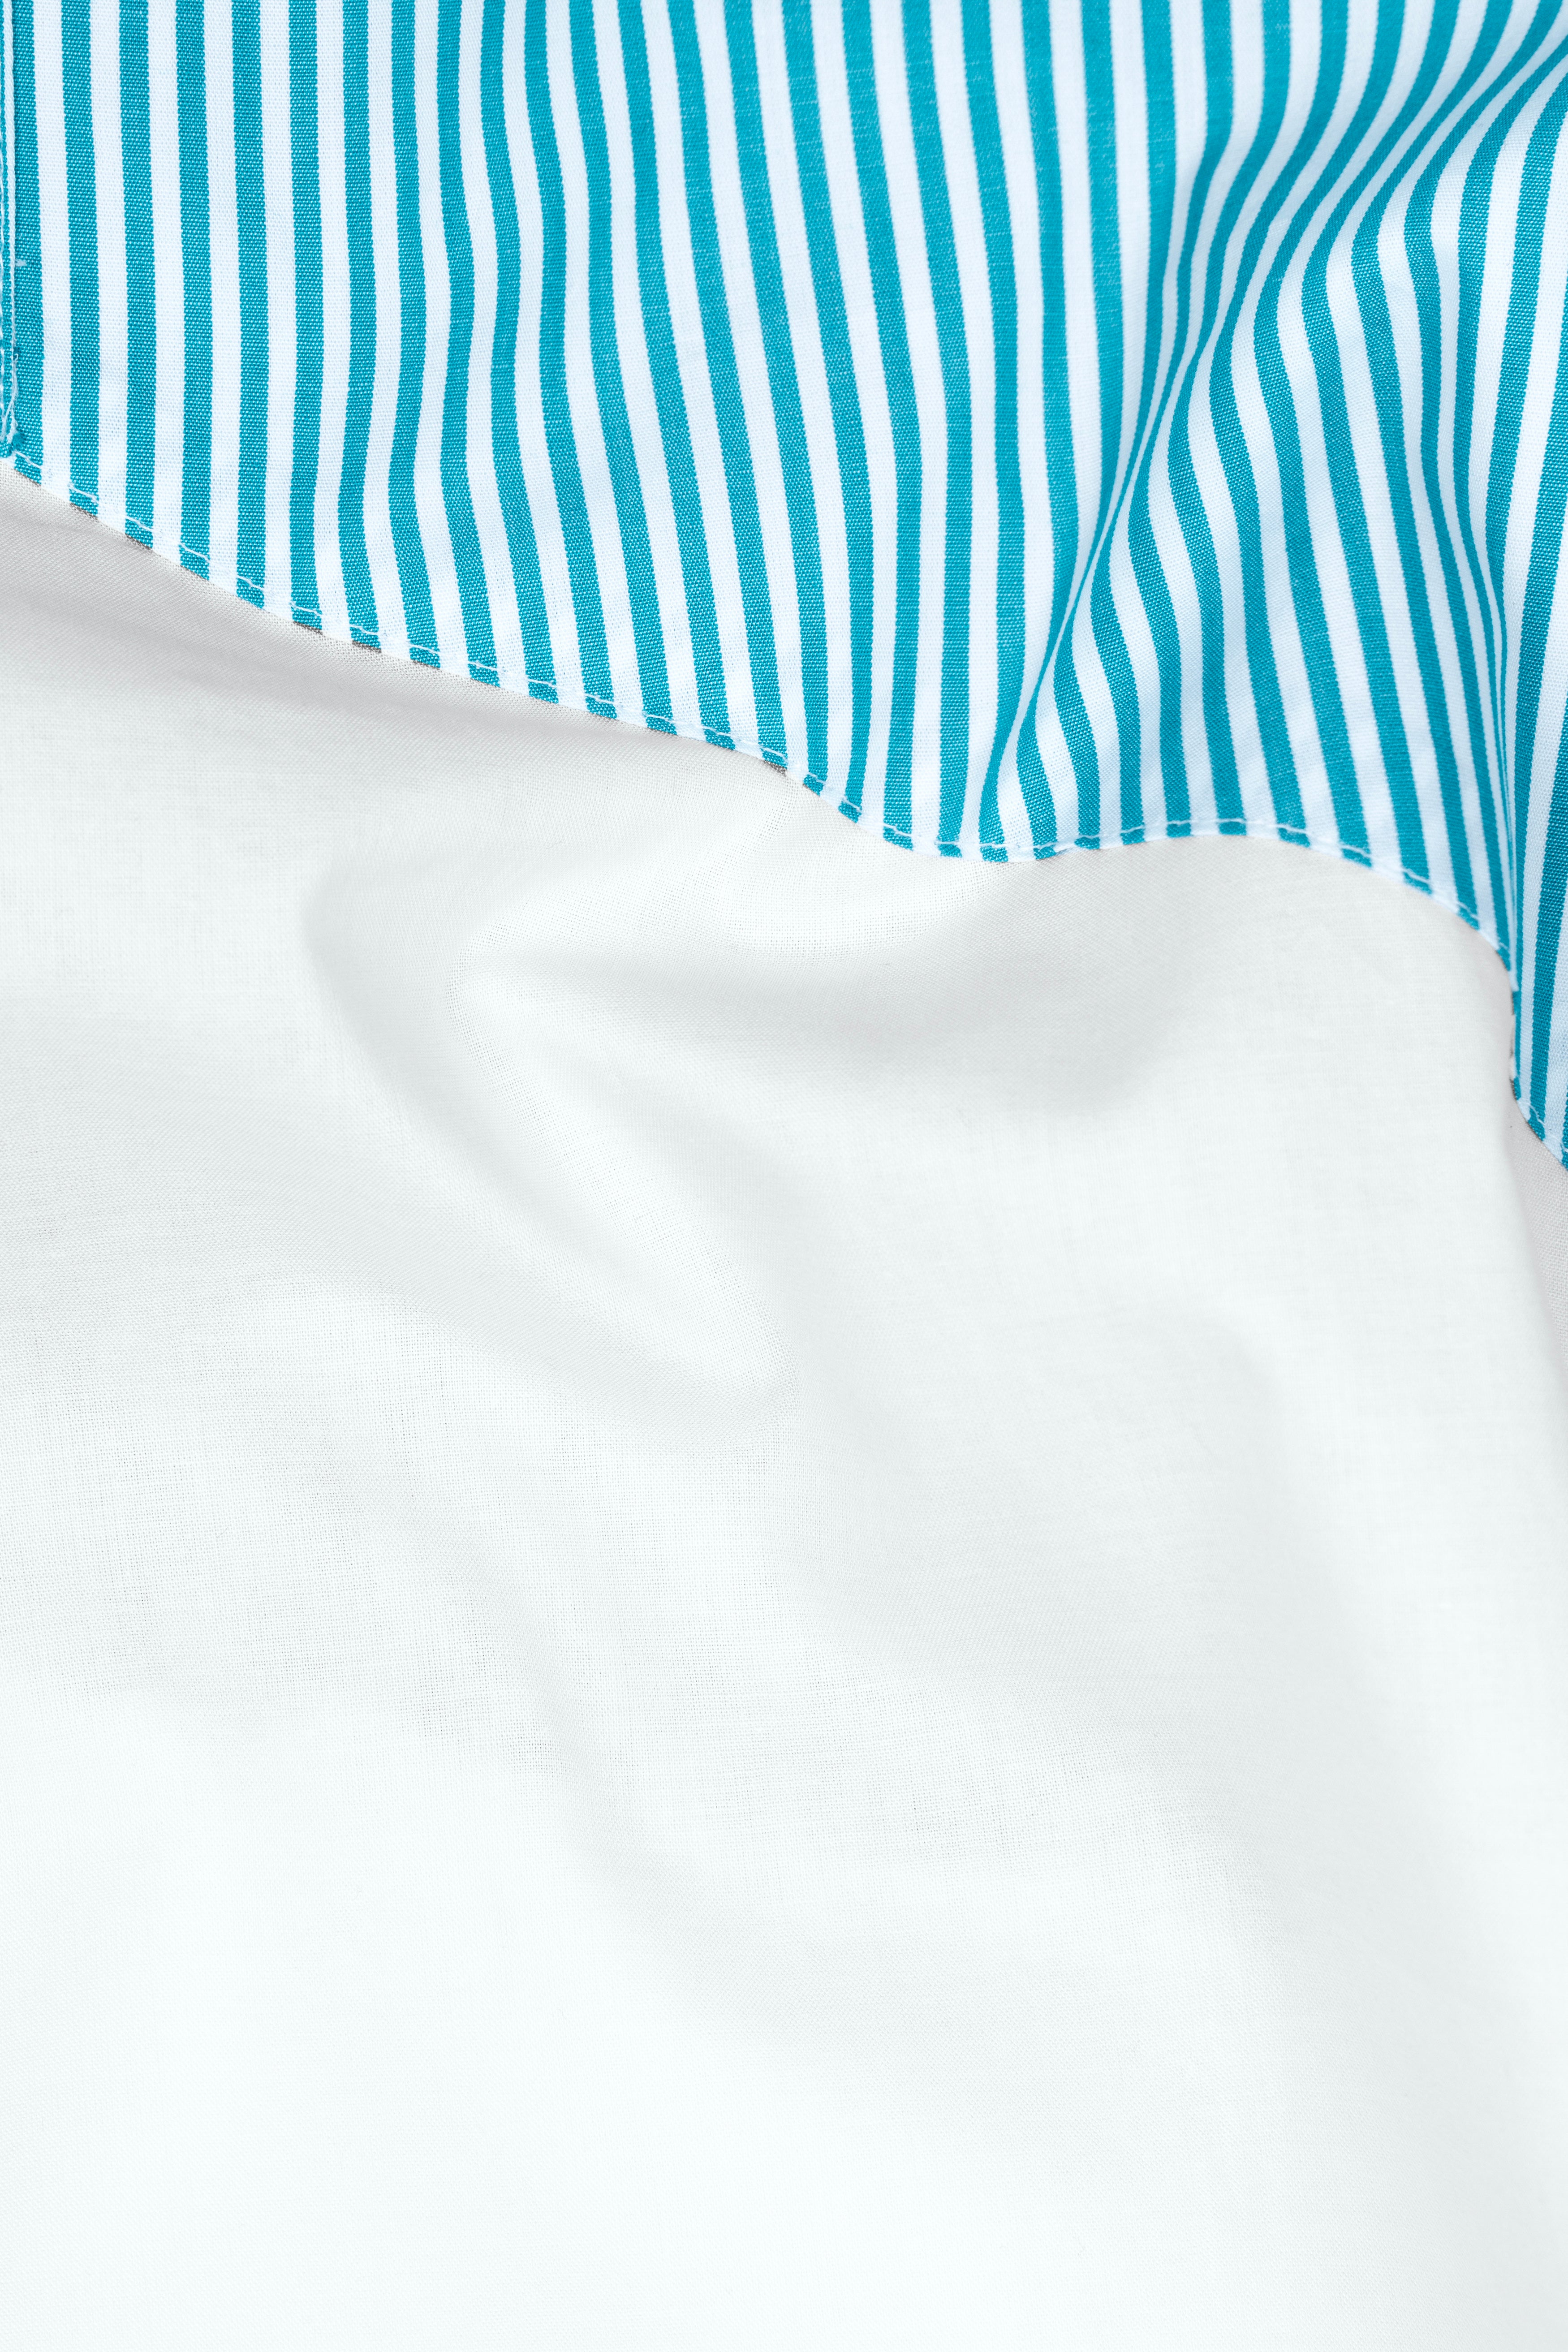 Cerulean Blue and Bright White Striped Super Soft Premium Cotton Designer Shirt